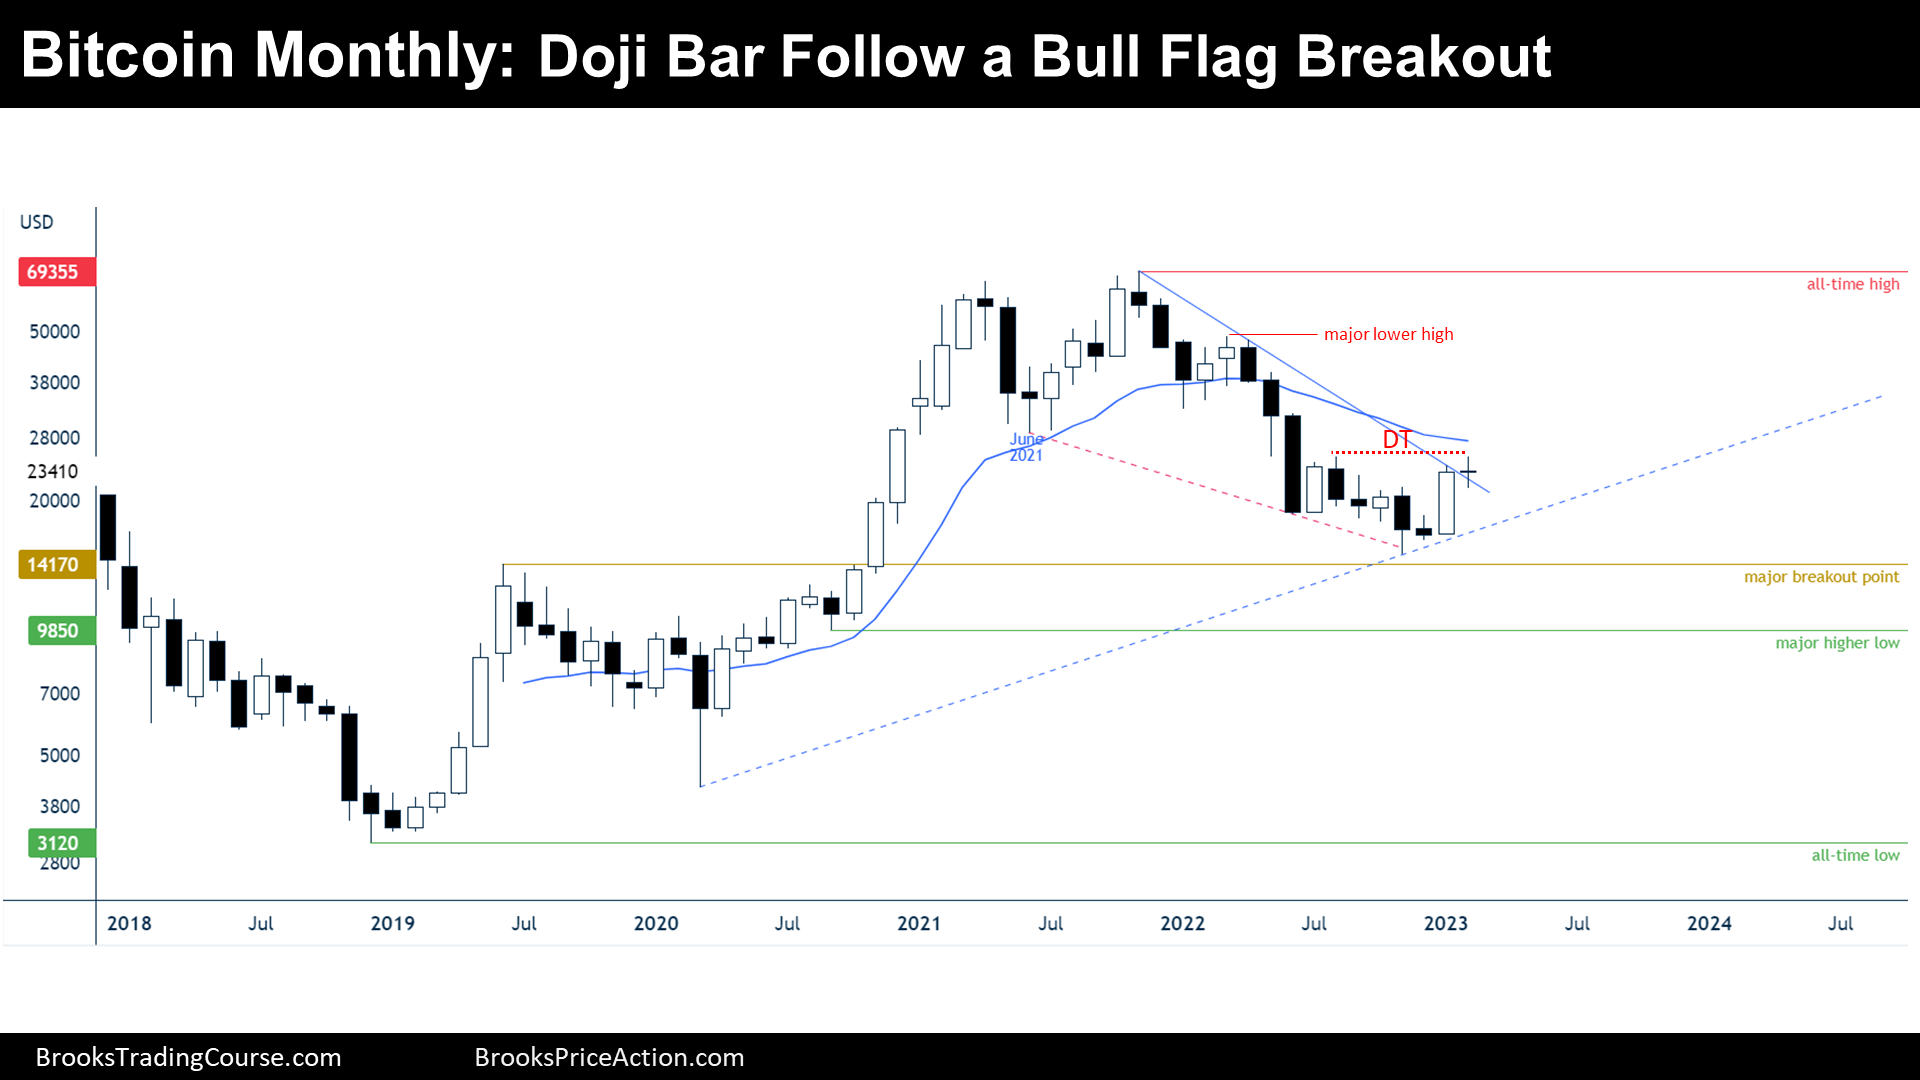 Bitcoin futures doji bar on monthly chart following bull flag breakout